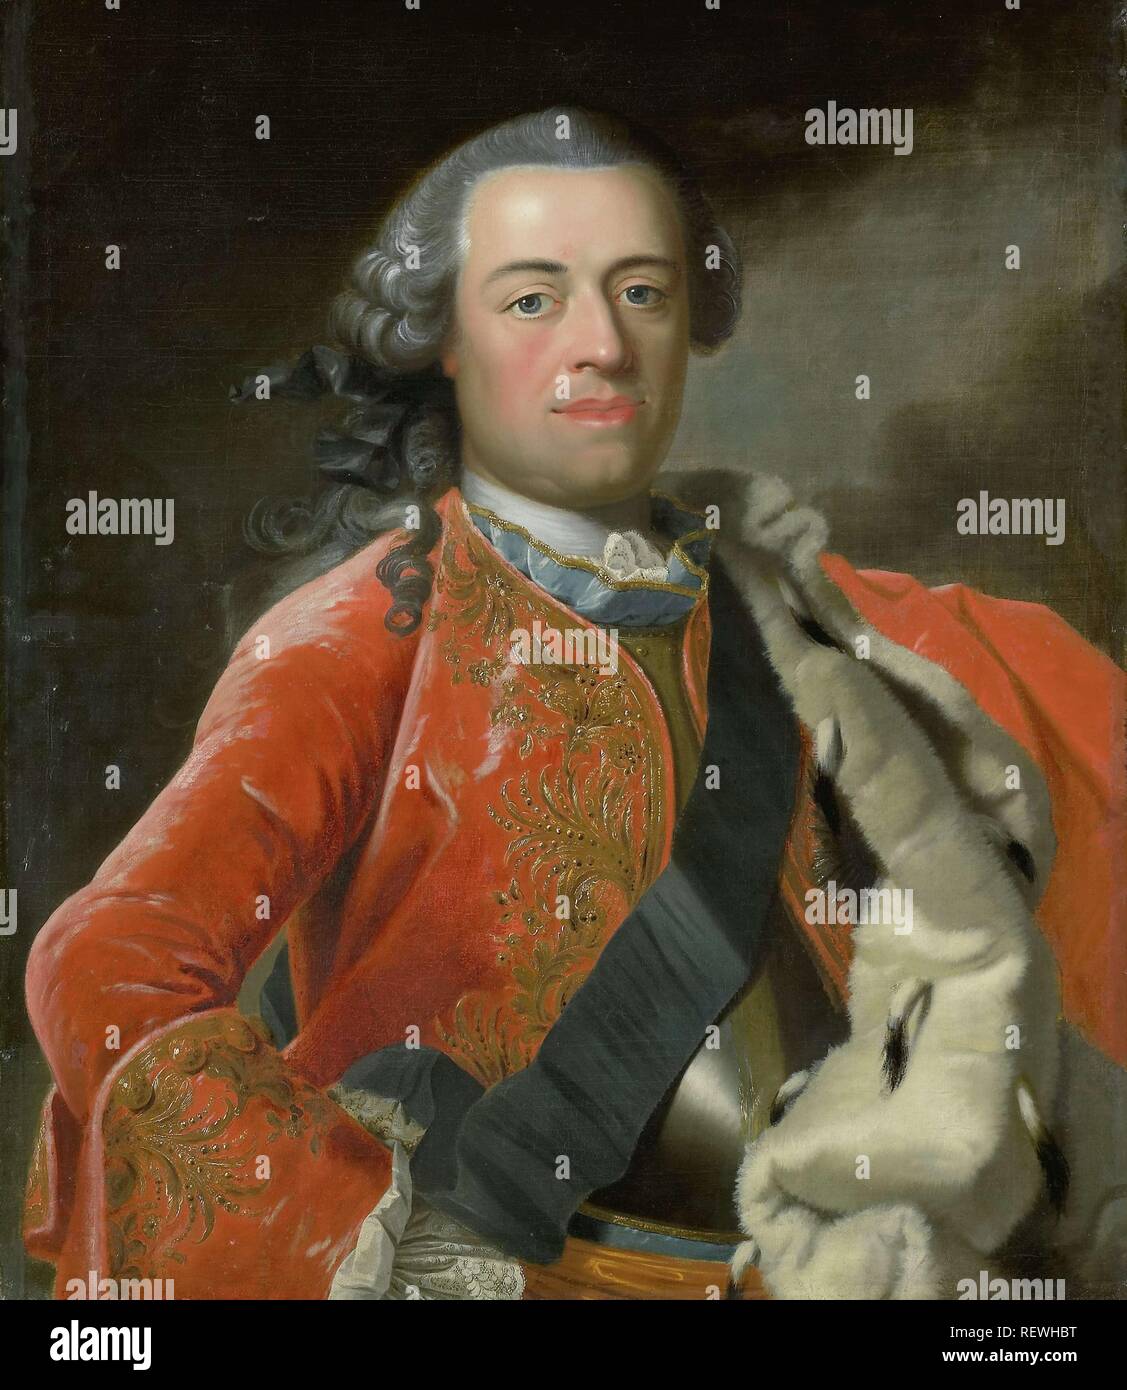 Portrait of William IV, Prince of Orange. Dating: c. 1750. Place: Northern Netherlands. Measurements: h 82.5 cm × w 70.5 cm; d 13 cm. Museum: Rijksmuseum, Amsterdam. Author: Frans van der Mijn (rejected attribution). Stock Photo